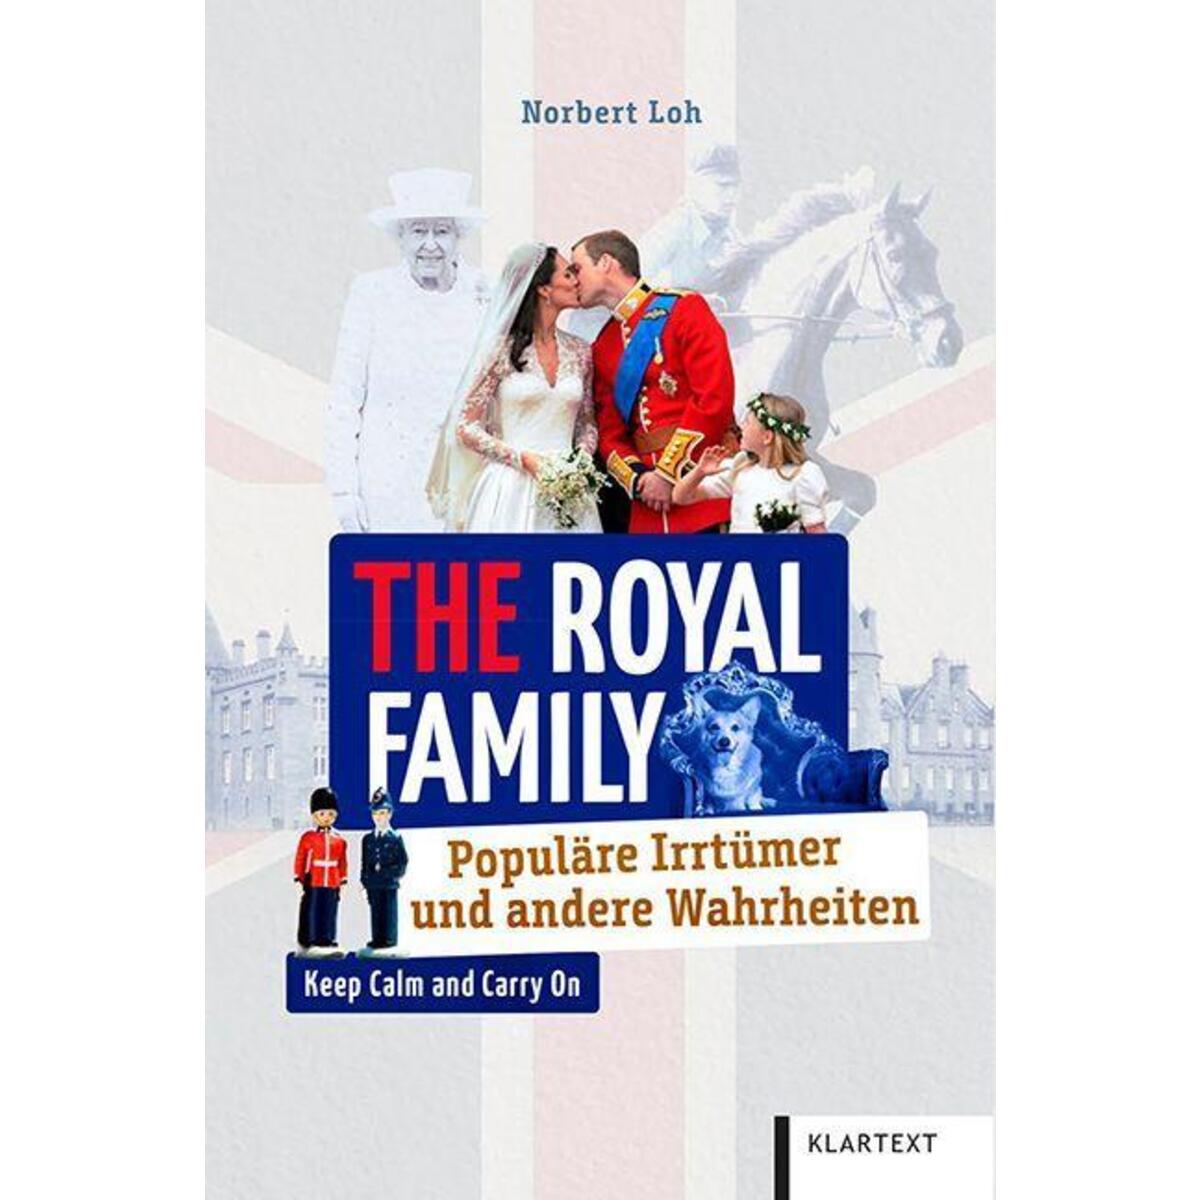 The Royal Family von Klartext Verlag